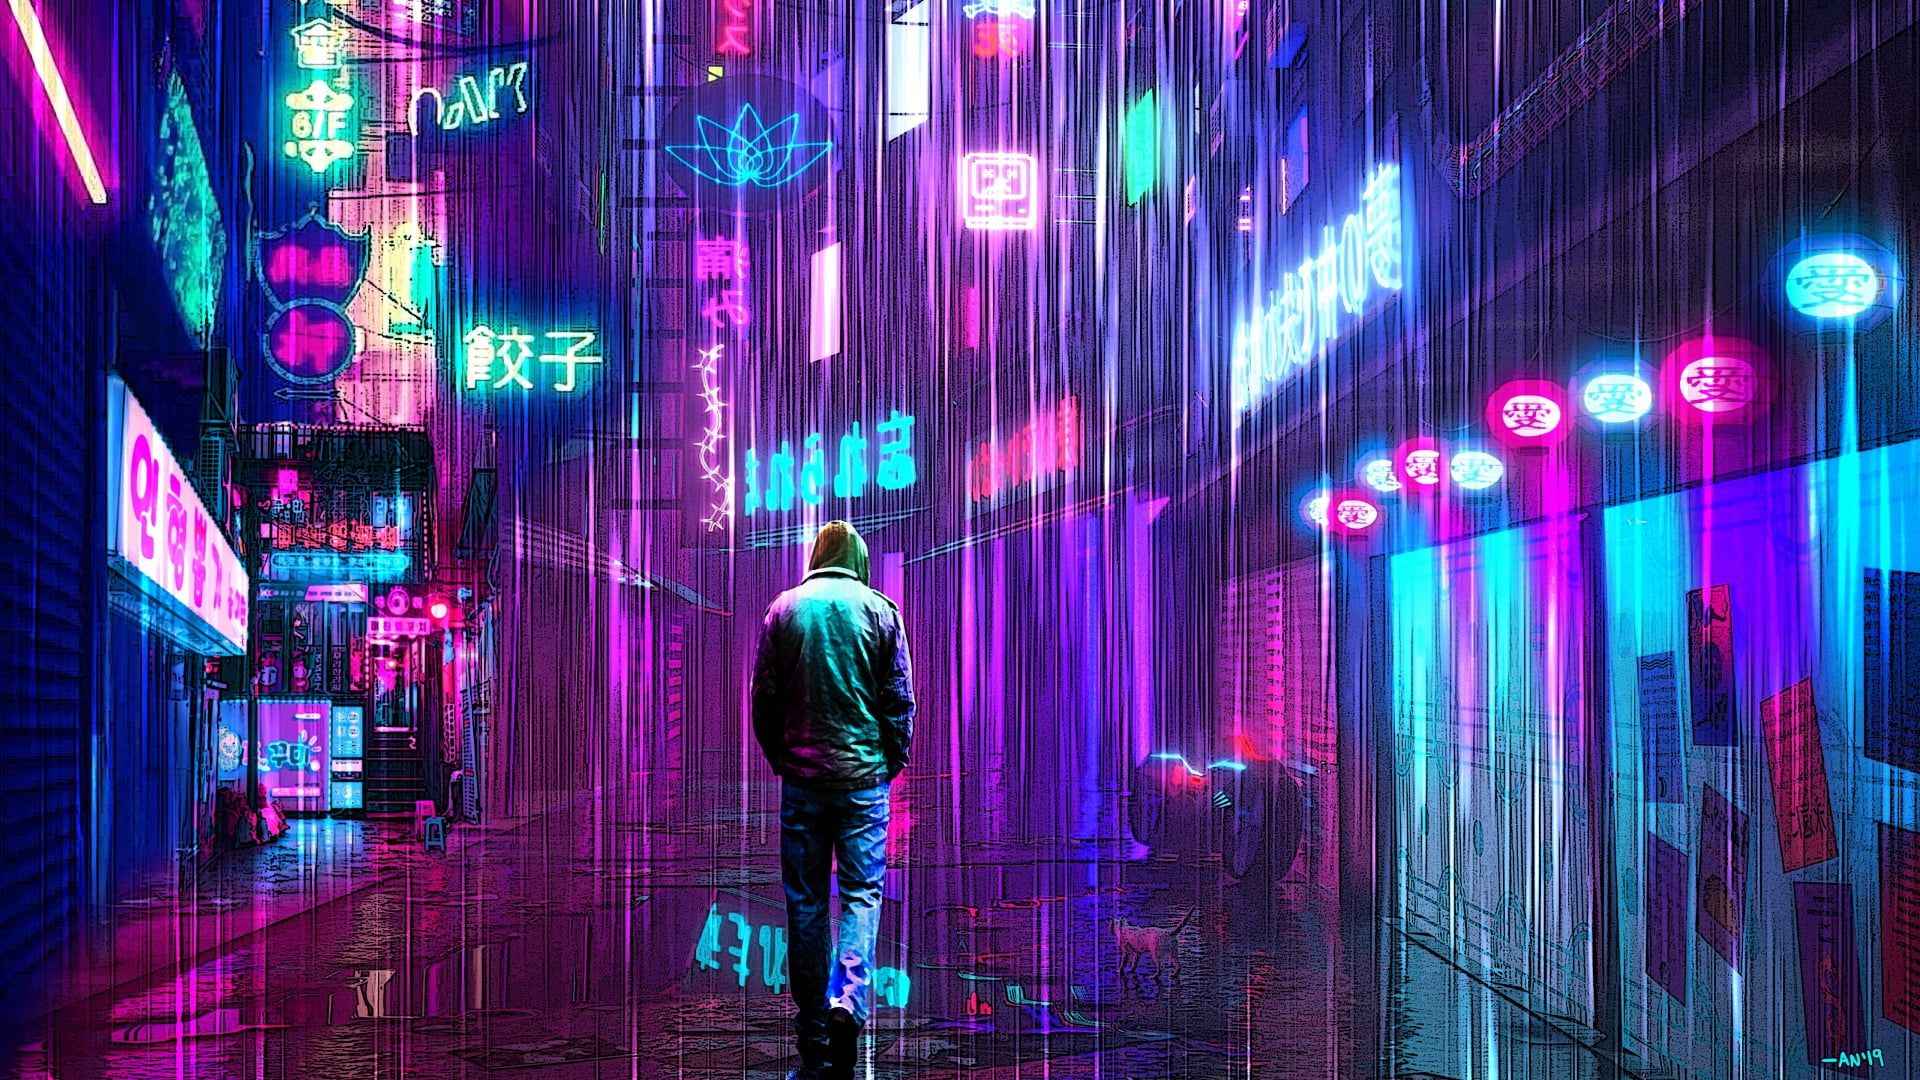 artwork #neon neon glow #cats #street #rain science fiction digital art #Retrowave #vaporwave #pink #blue P #wallpaper. Neon wallpaper, Cyberpunk, Neon glow